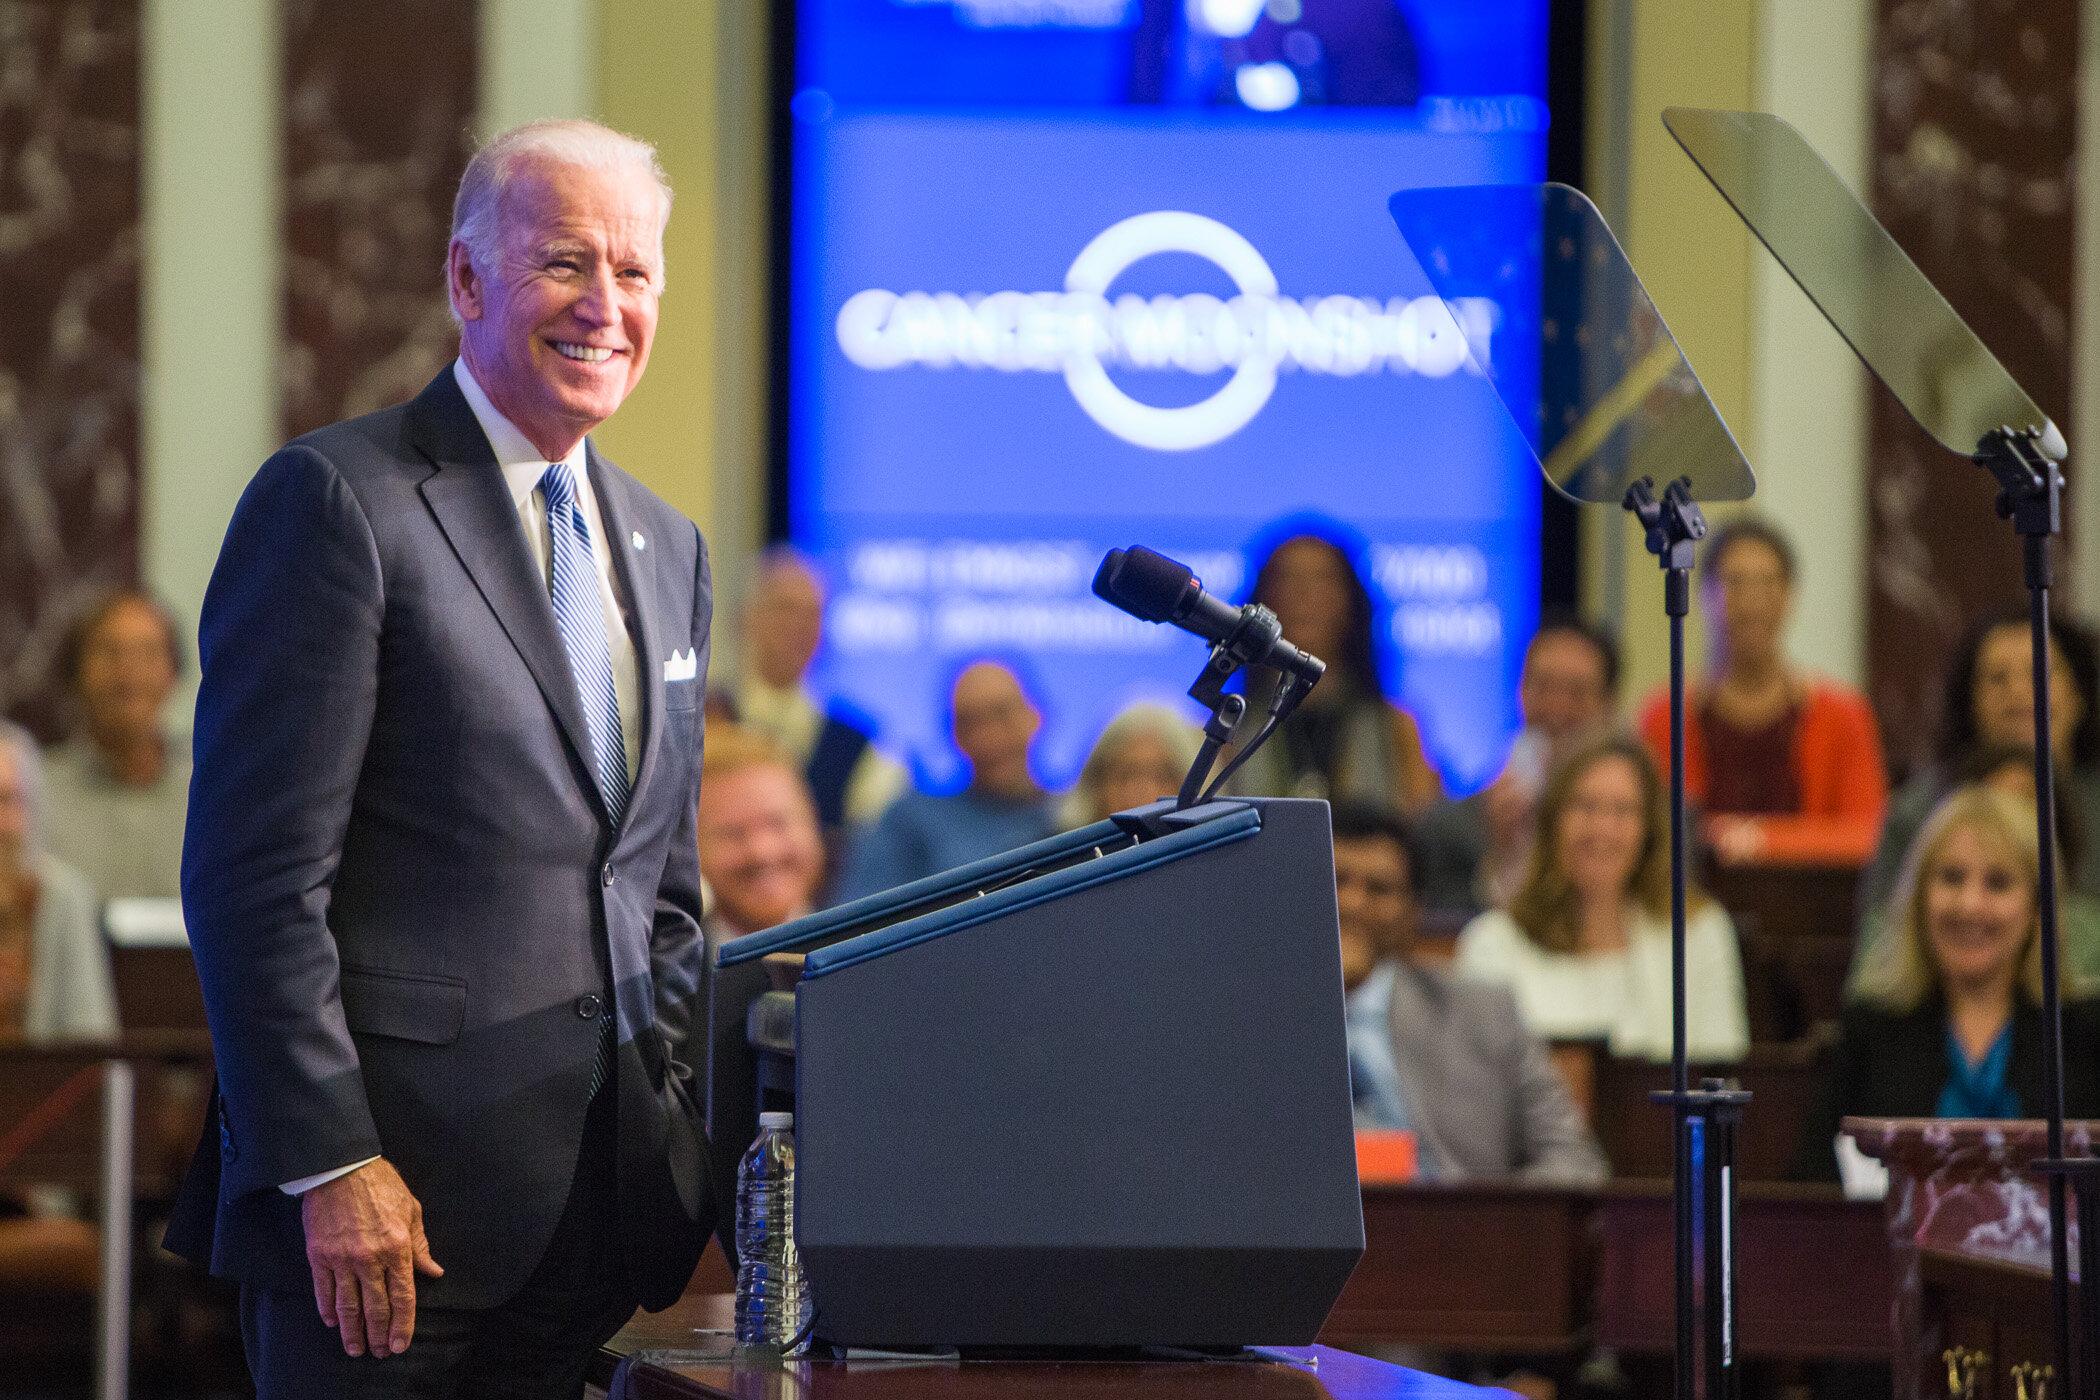 Democrats on edge as they await Biden’s response to debate chaos